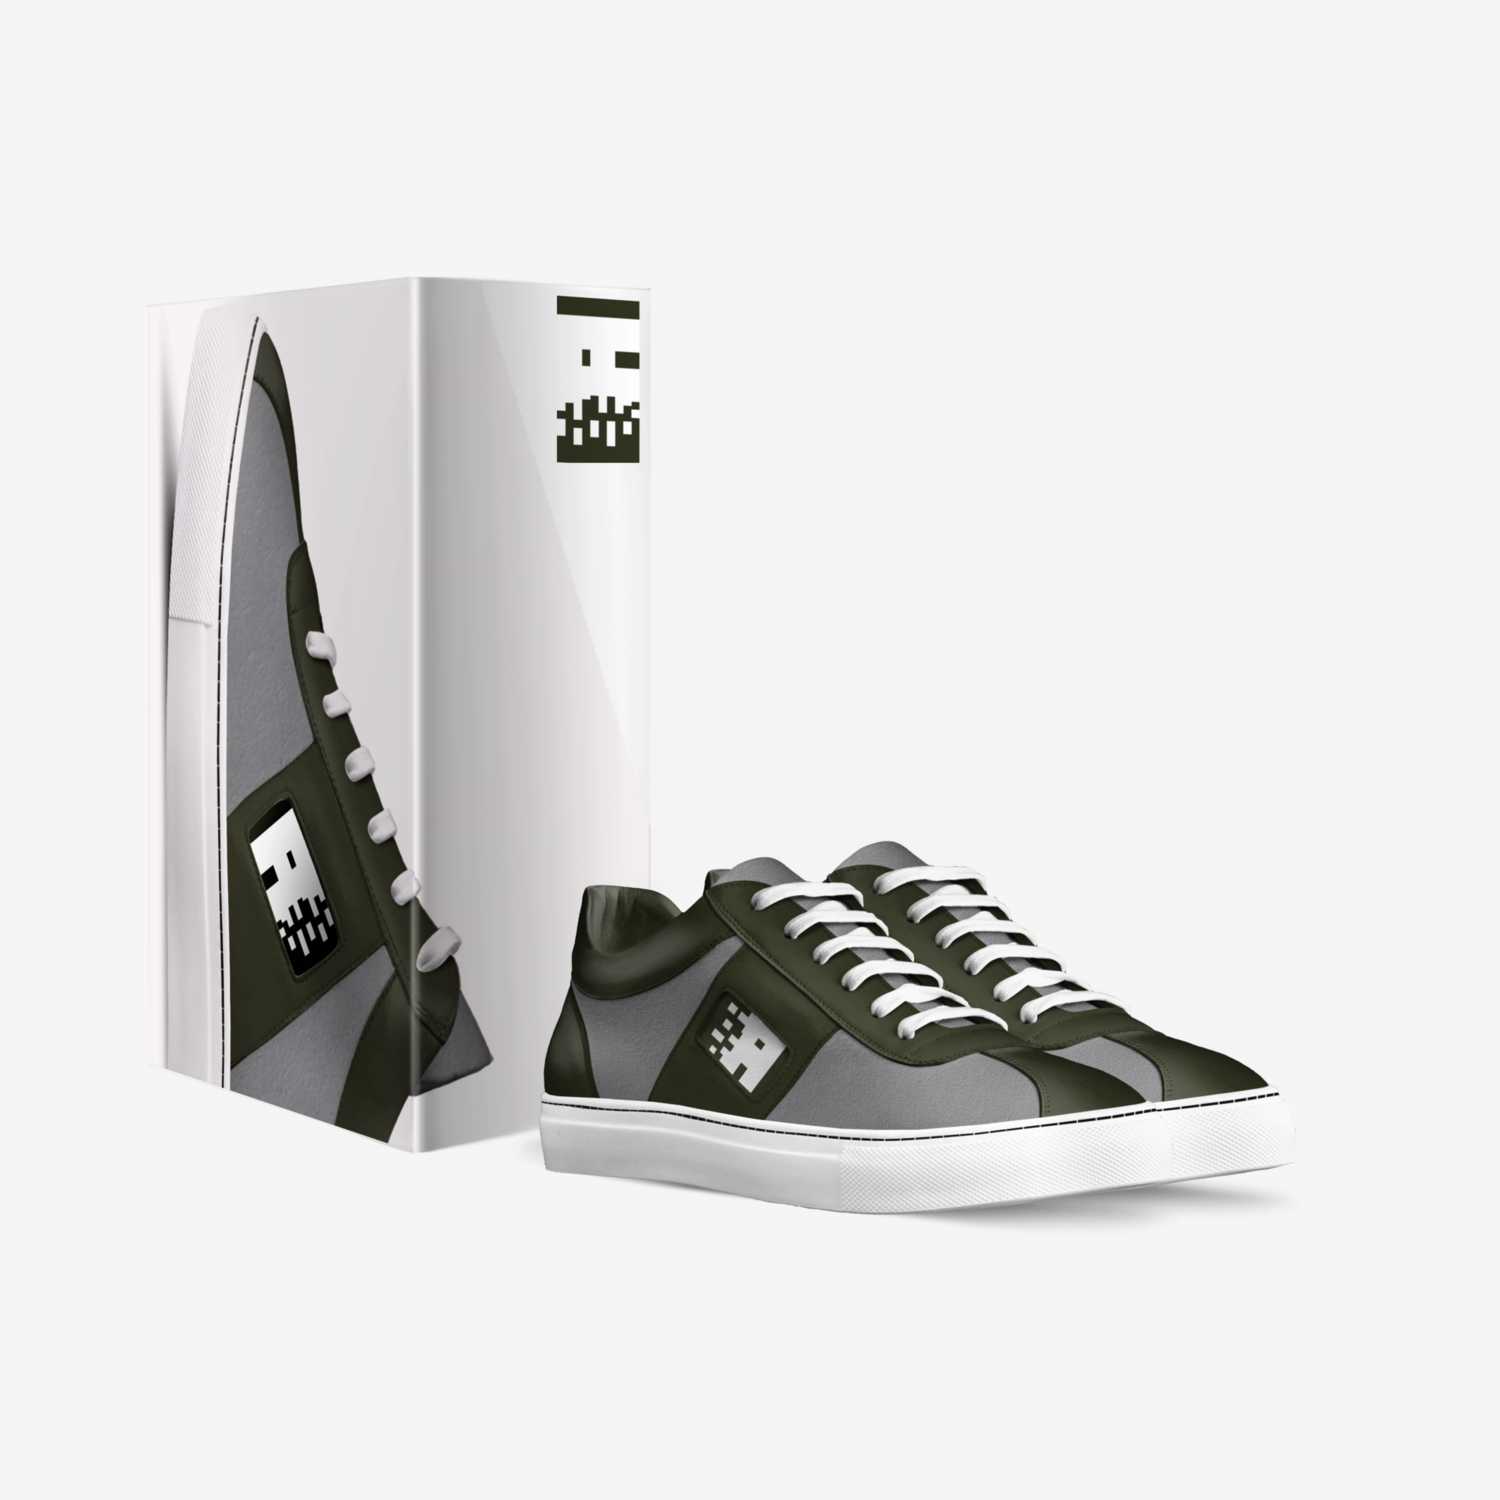 AuRe custom made in Italy shoes by Raphael Benjamin De Guzman | Box view